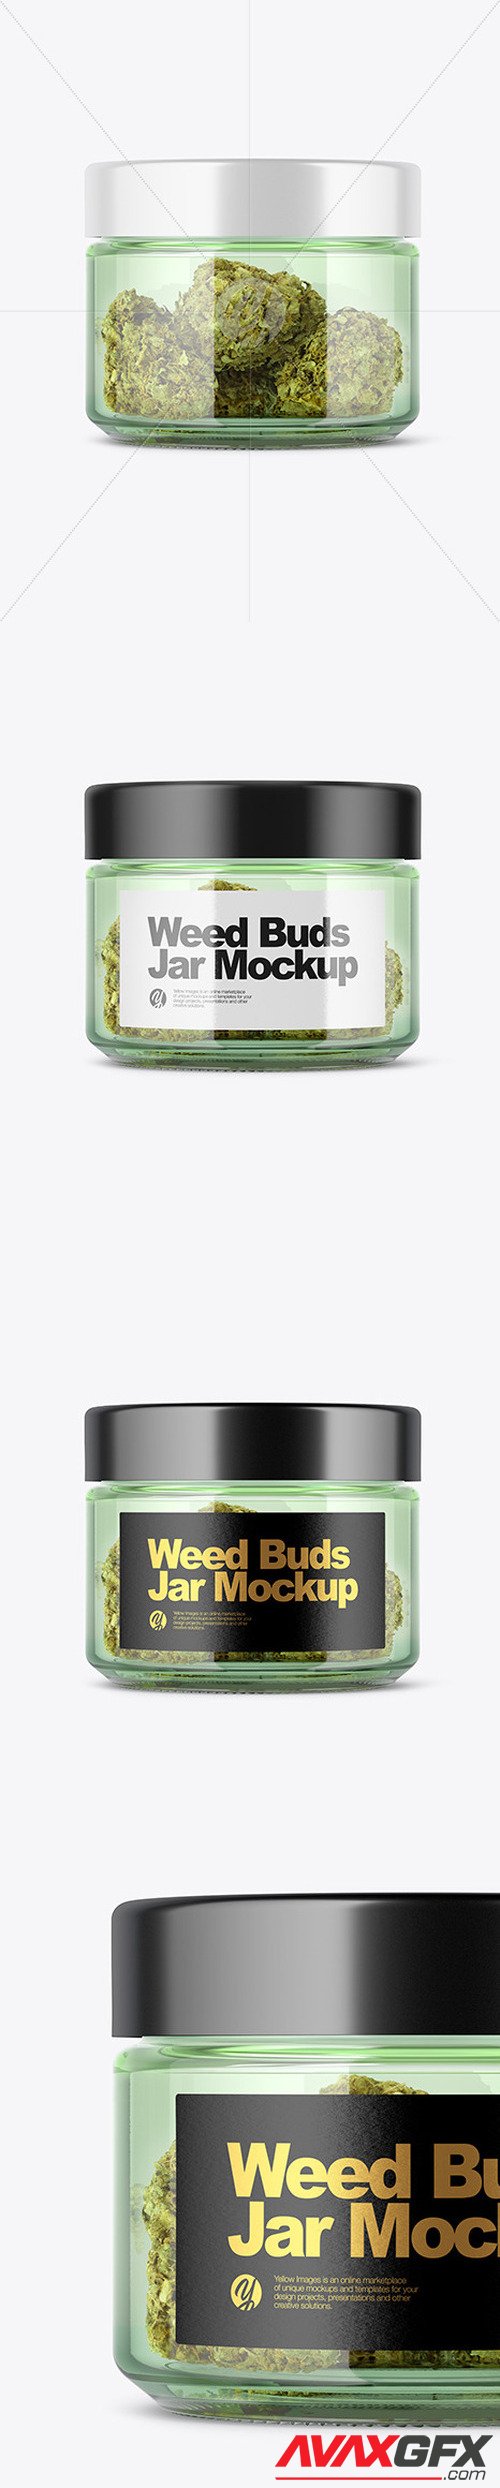 Green Glass Jar with Weed Buds Mockup 51629 TIF